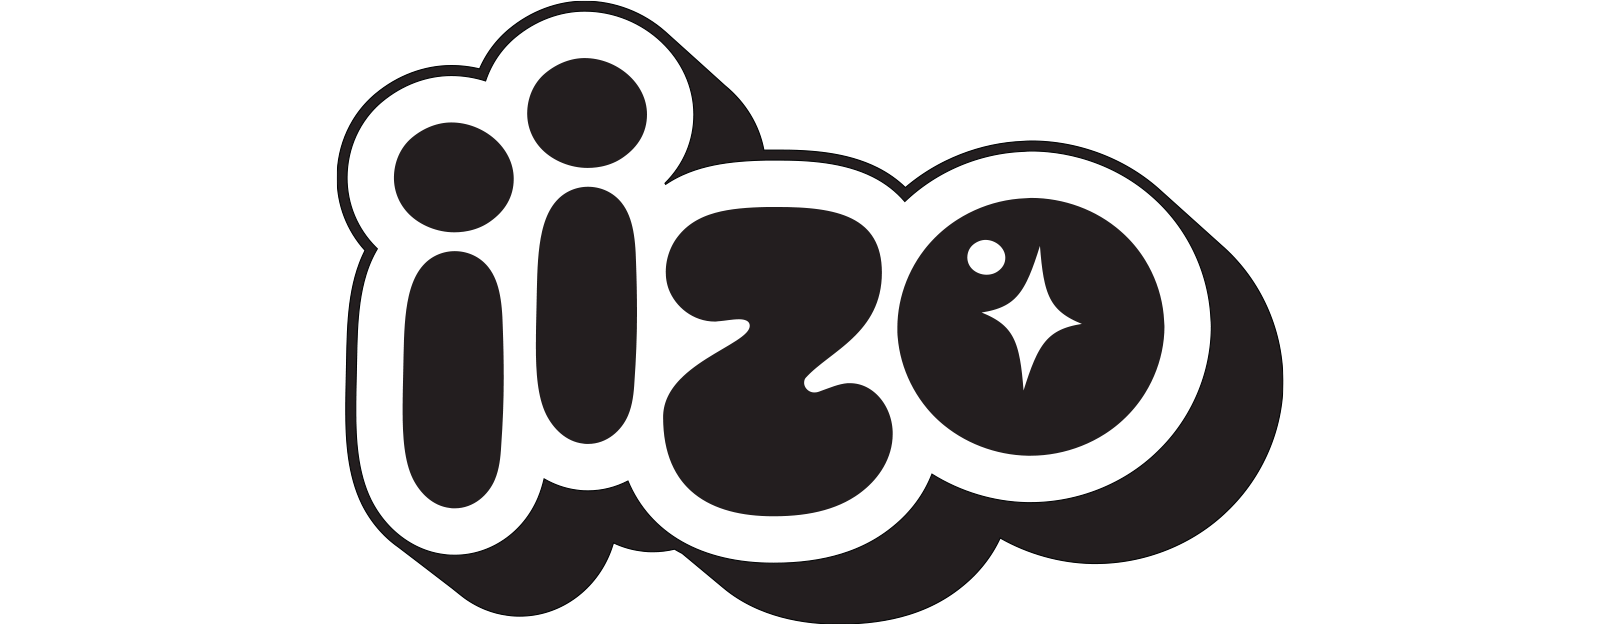 iiZO Shop Help Center logo